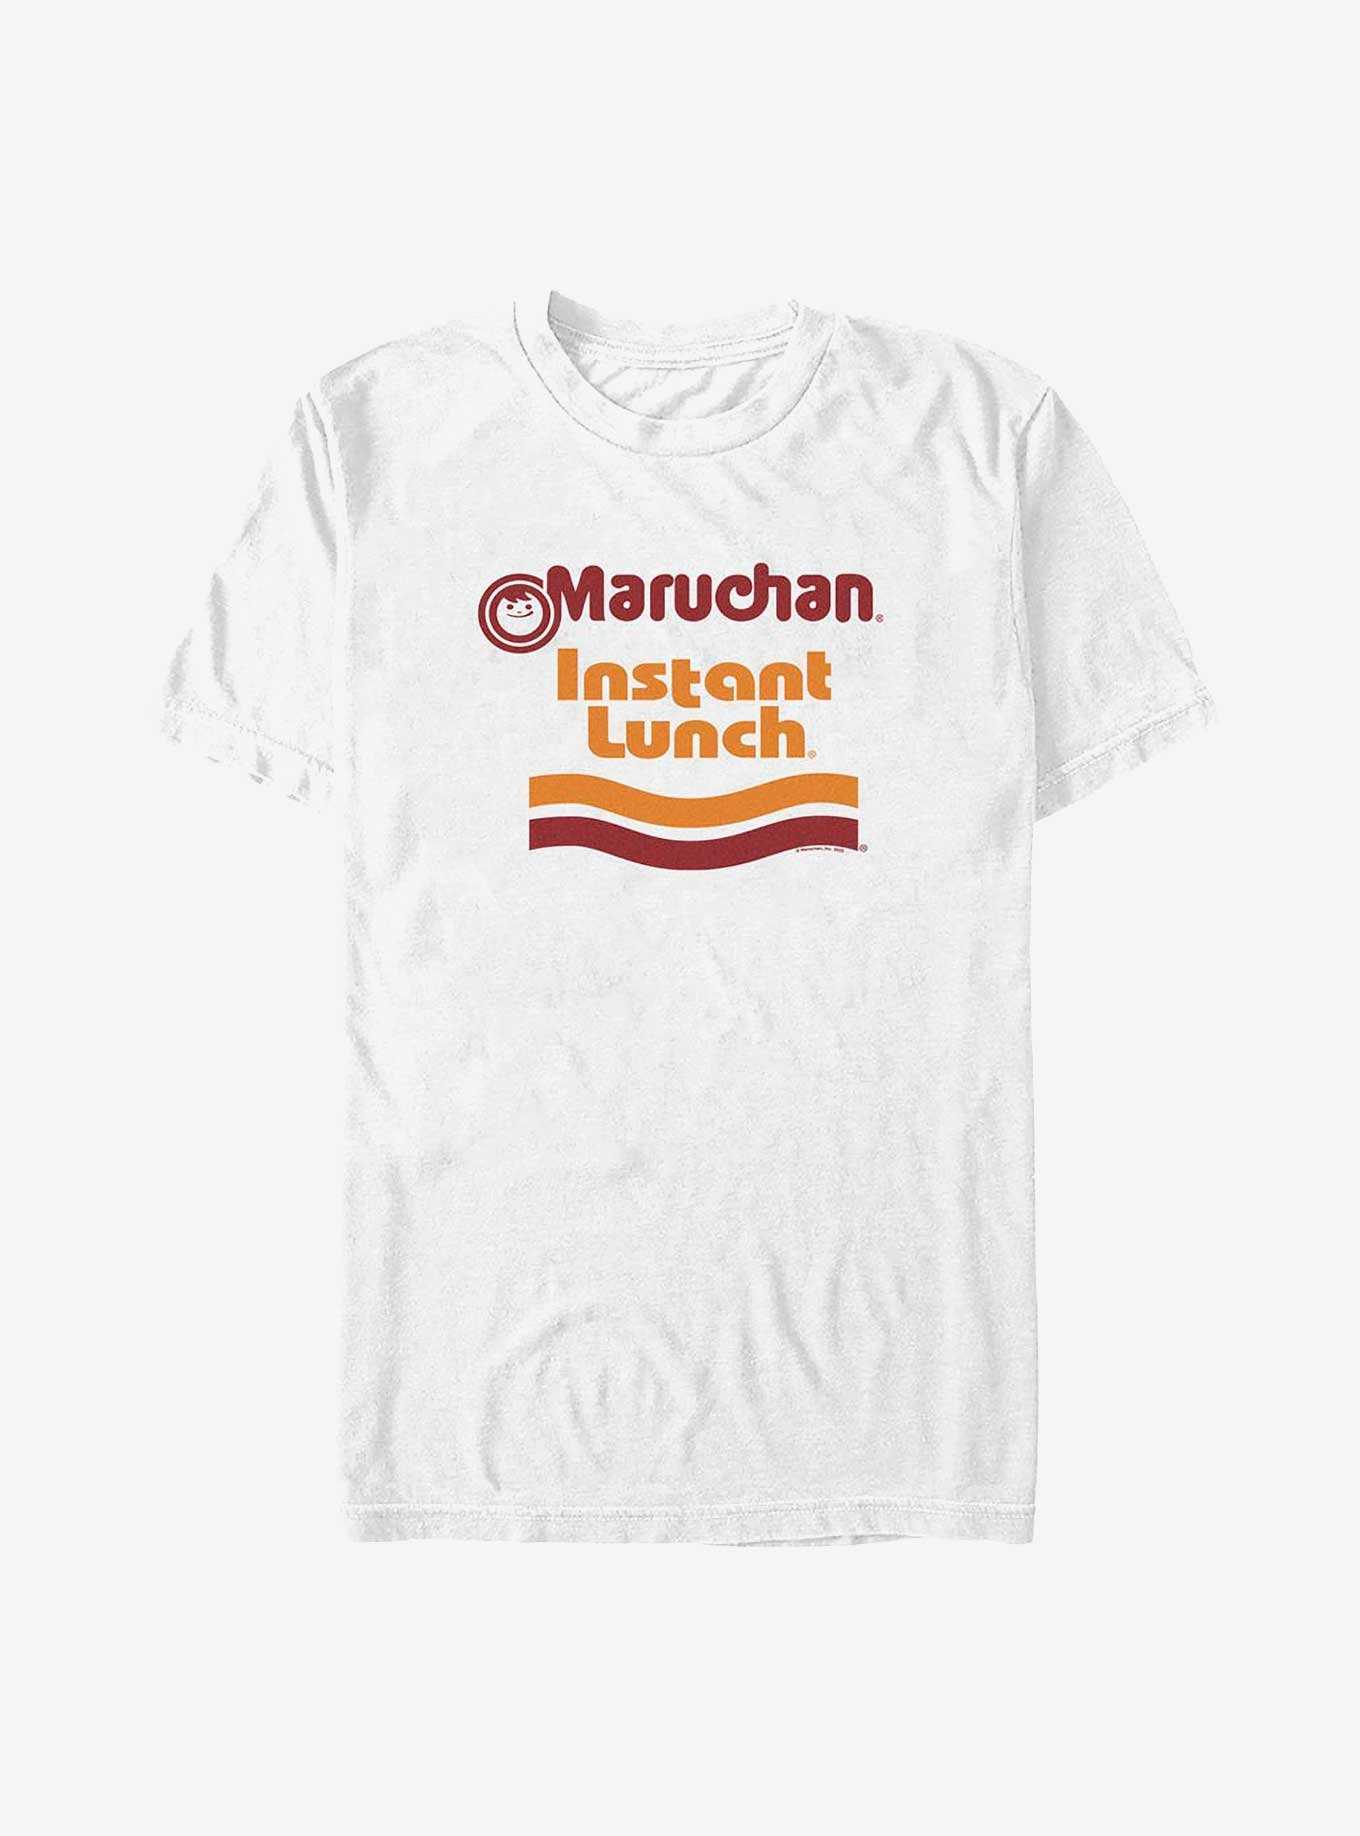 Maruchan Instant Lunch-25 T-Shirt, , hi-res